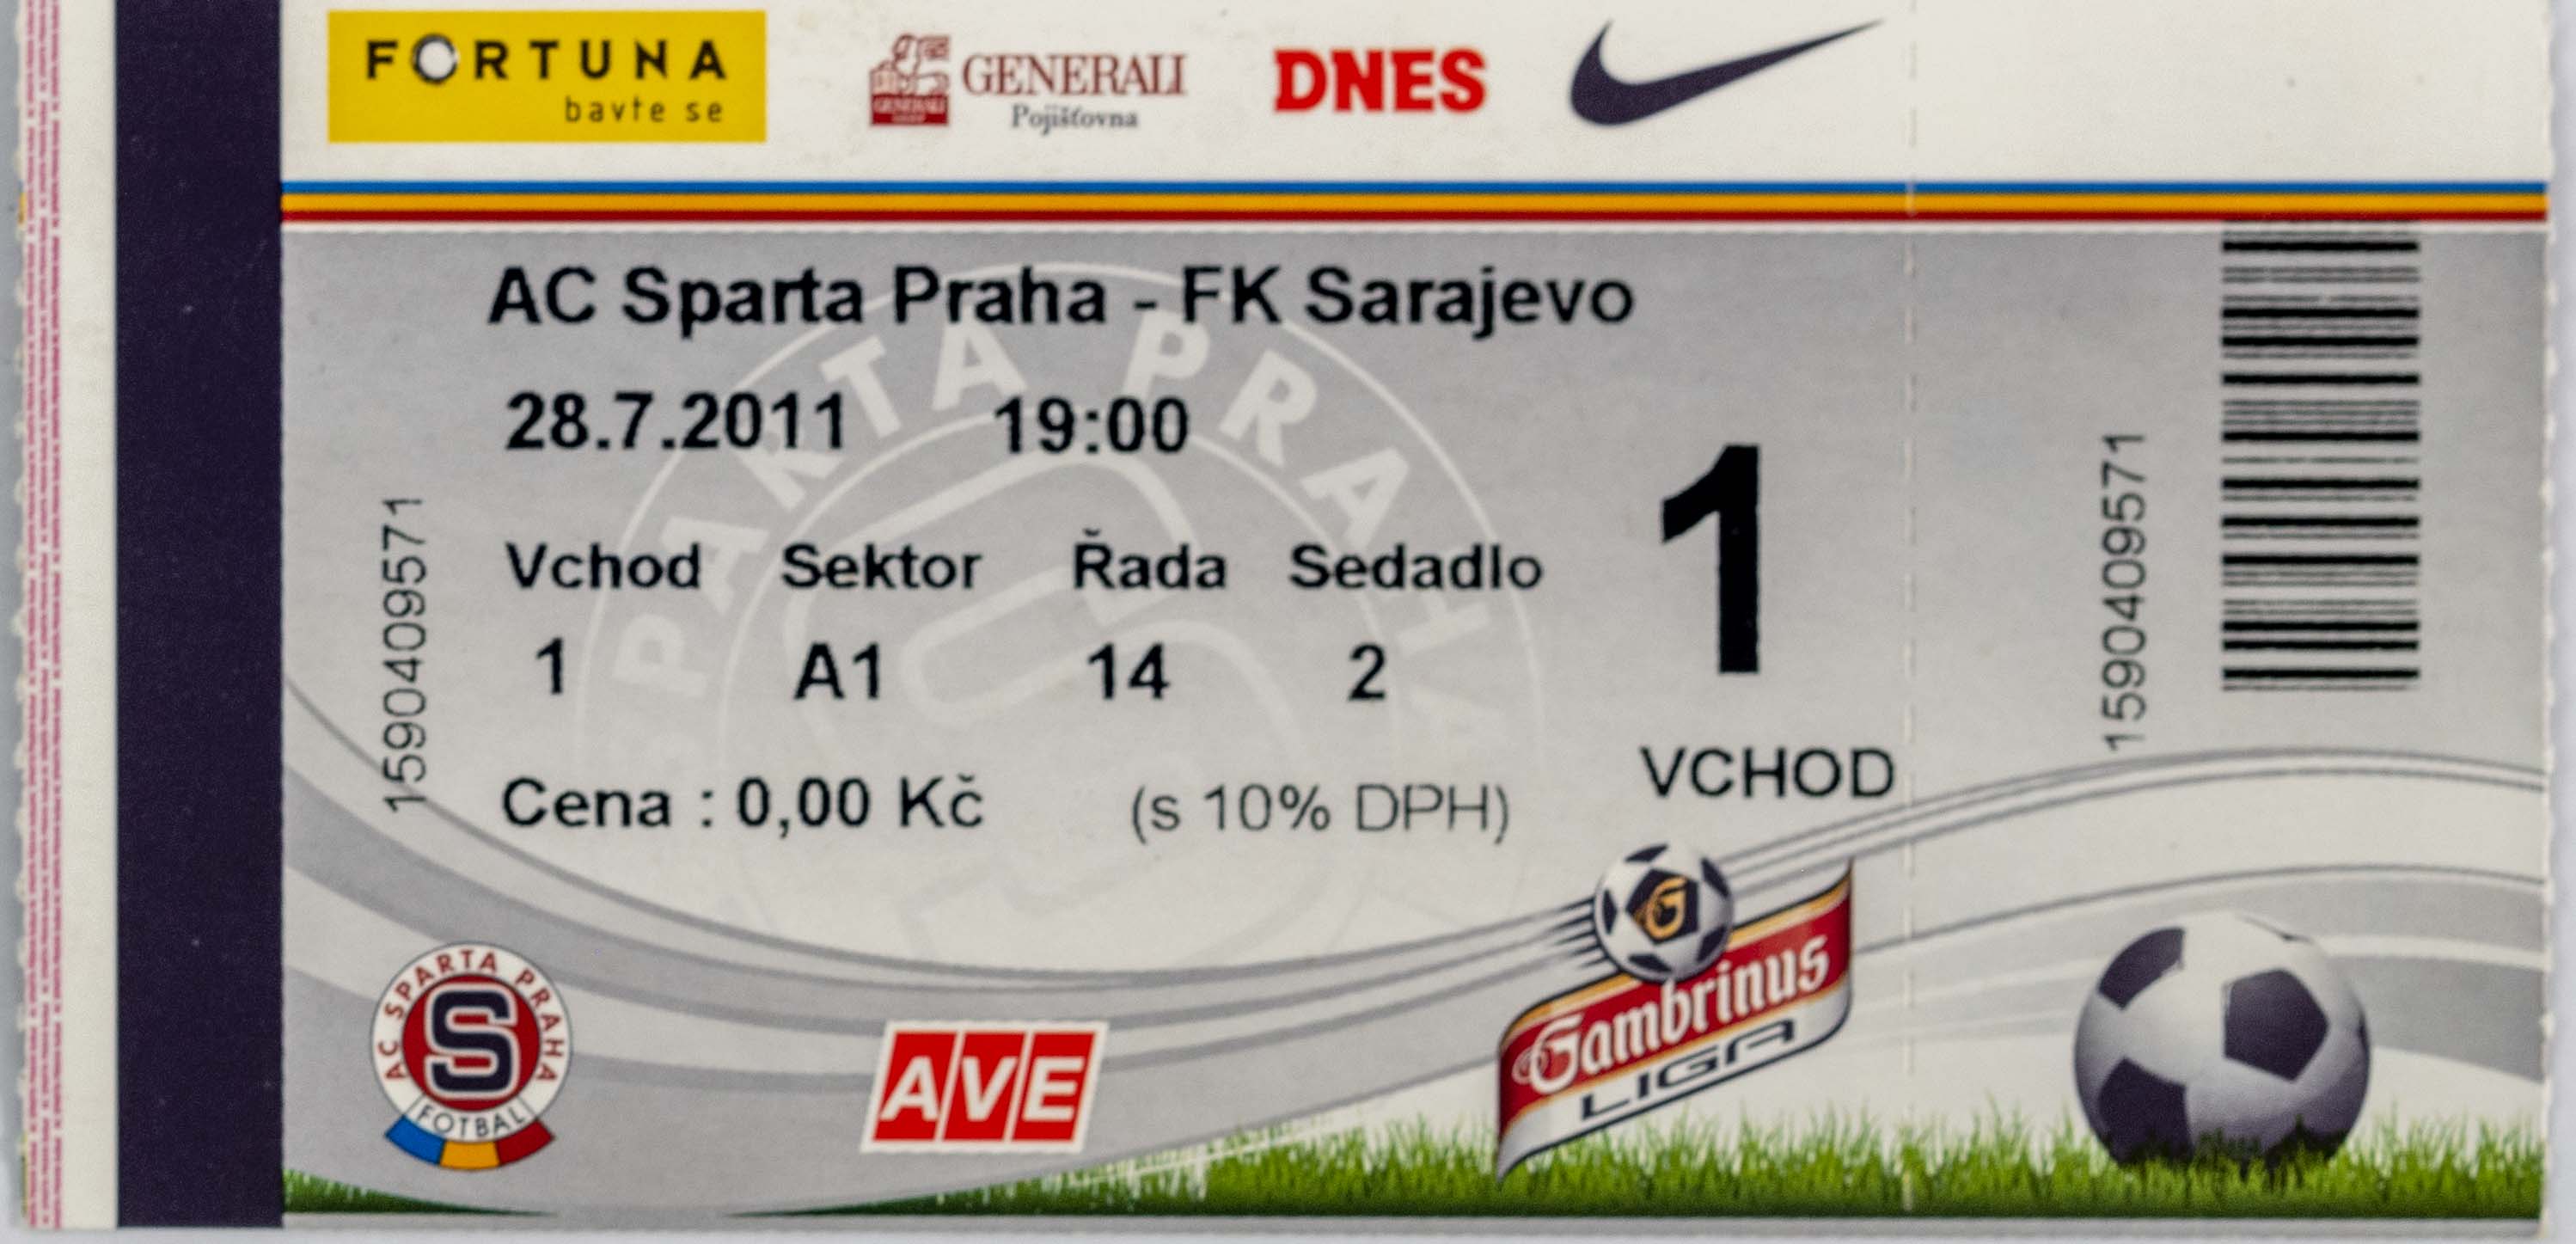 Vstupenka fotbal UEFA, AC Sparta Praha v. FK Sarajevo, 2011